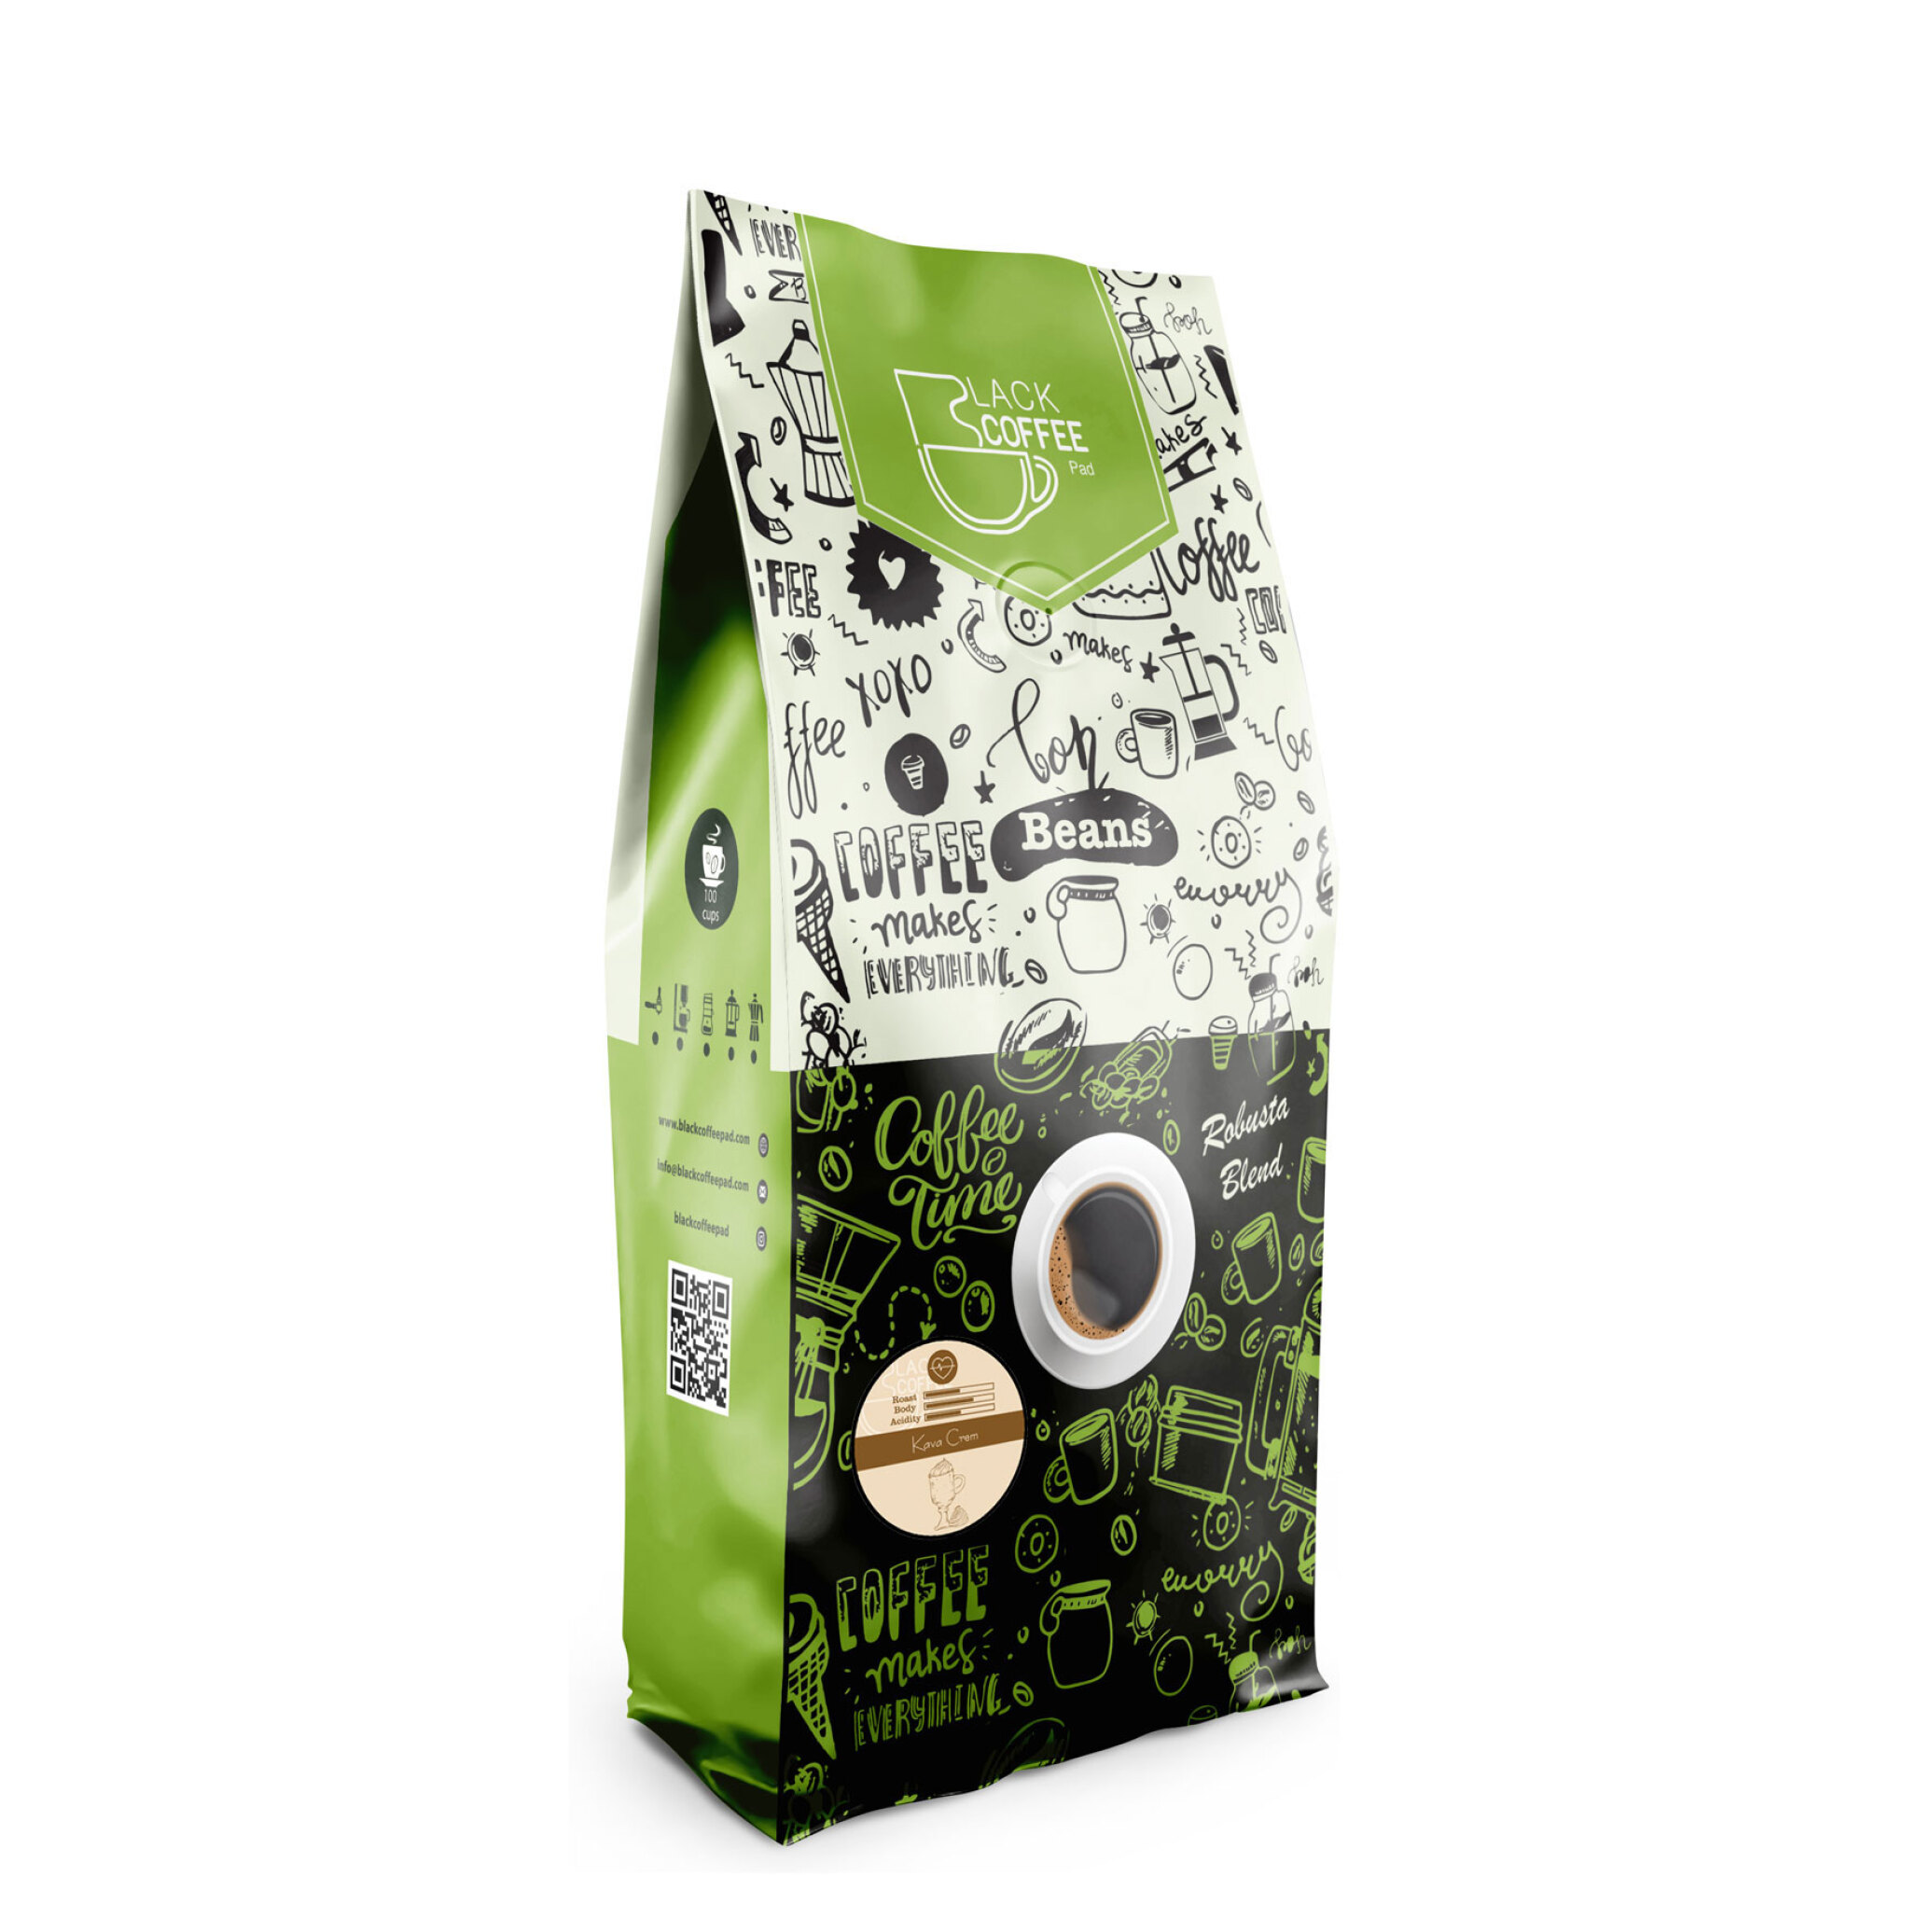  دانه قهوه کاوا کرم - ۱ کیلو گرم - kava cream coffee beans | بلک کافی | دانه قهوه | انواع دانه قهوه | بسته بندی قهوه 